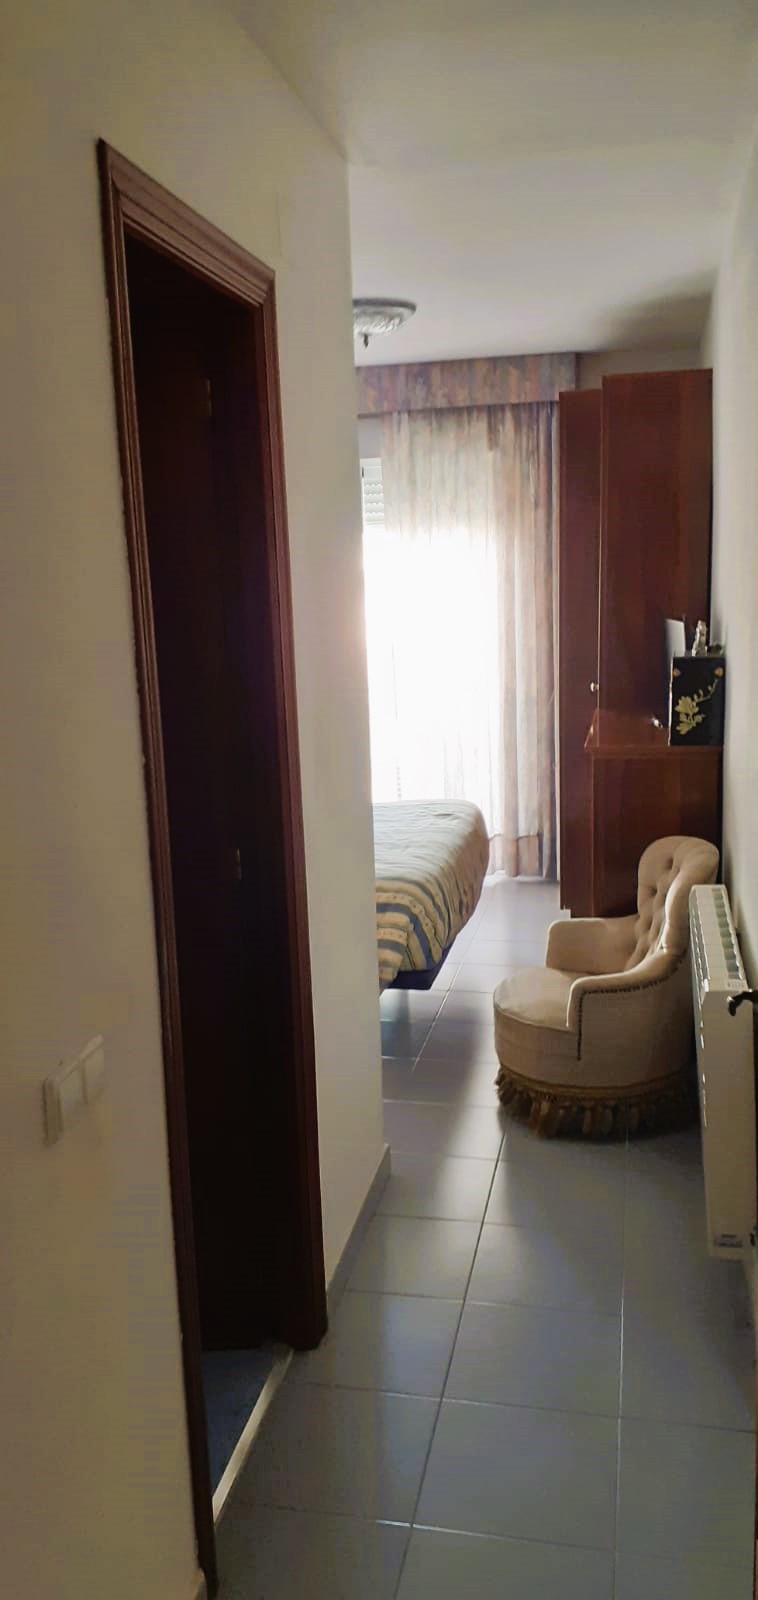 La Nucia: Spacious 3 bedroom apartment